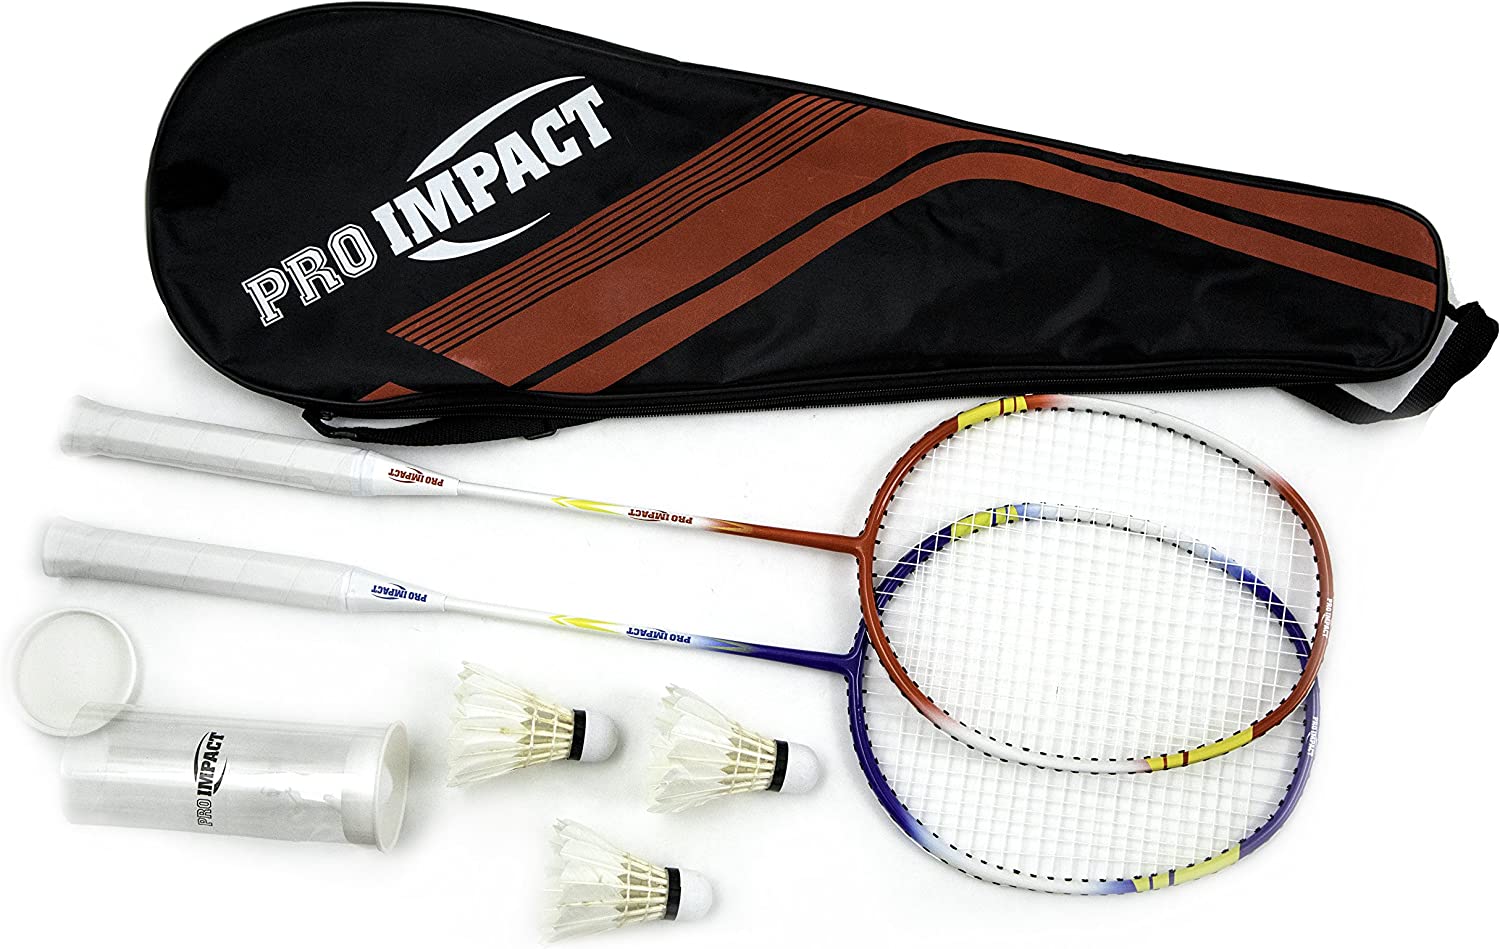 pro badminton kits - Civilized Health